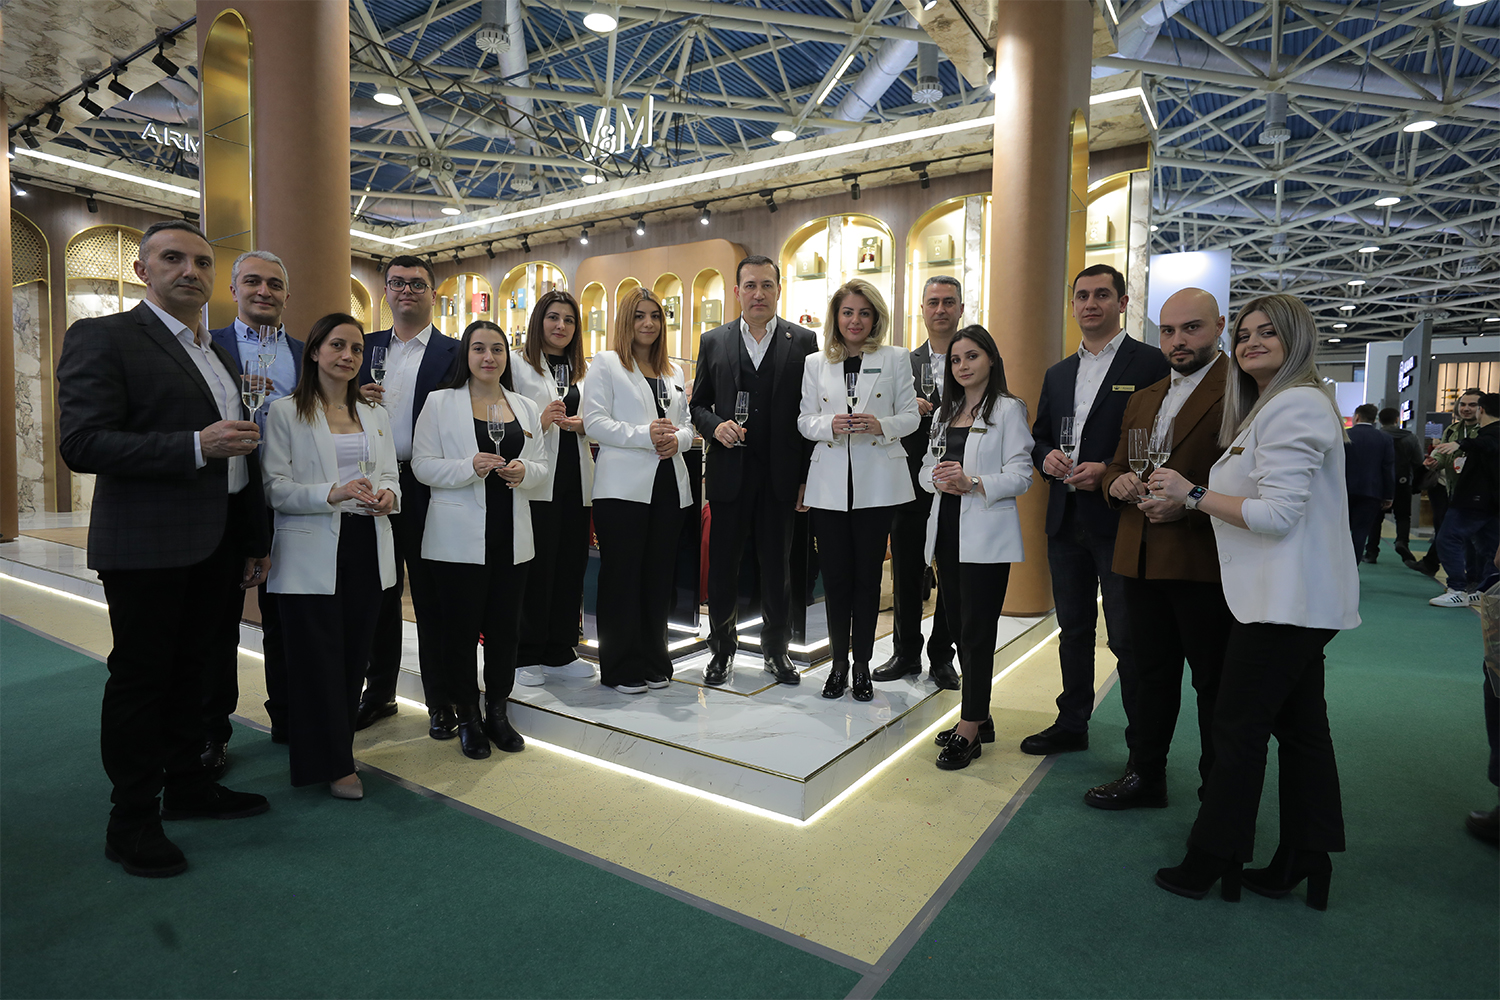 V&M Armenian brandy presented at ProdExpo international exhibition